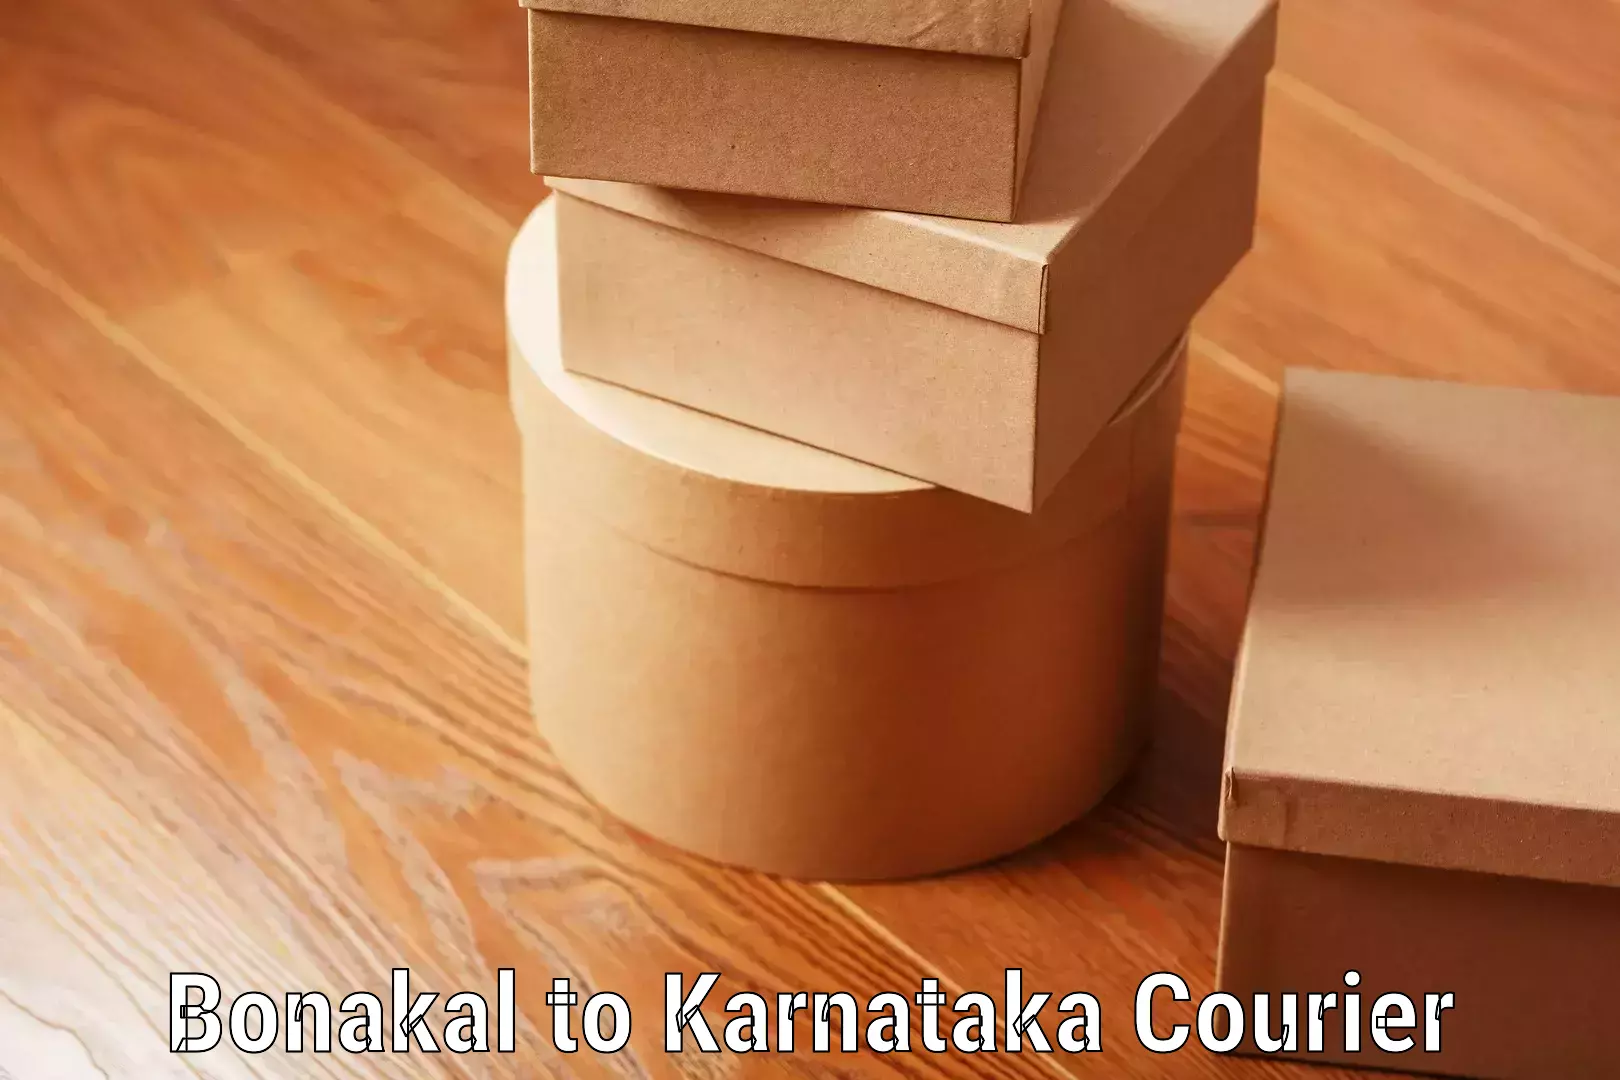 Luggage transport company Bonakal to Karnataka